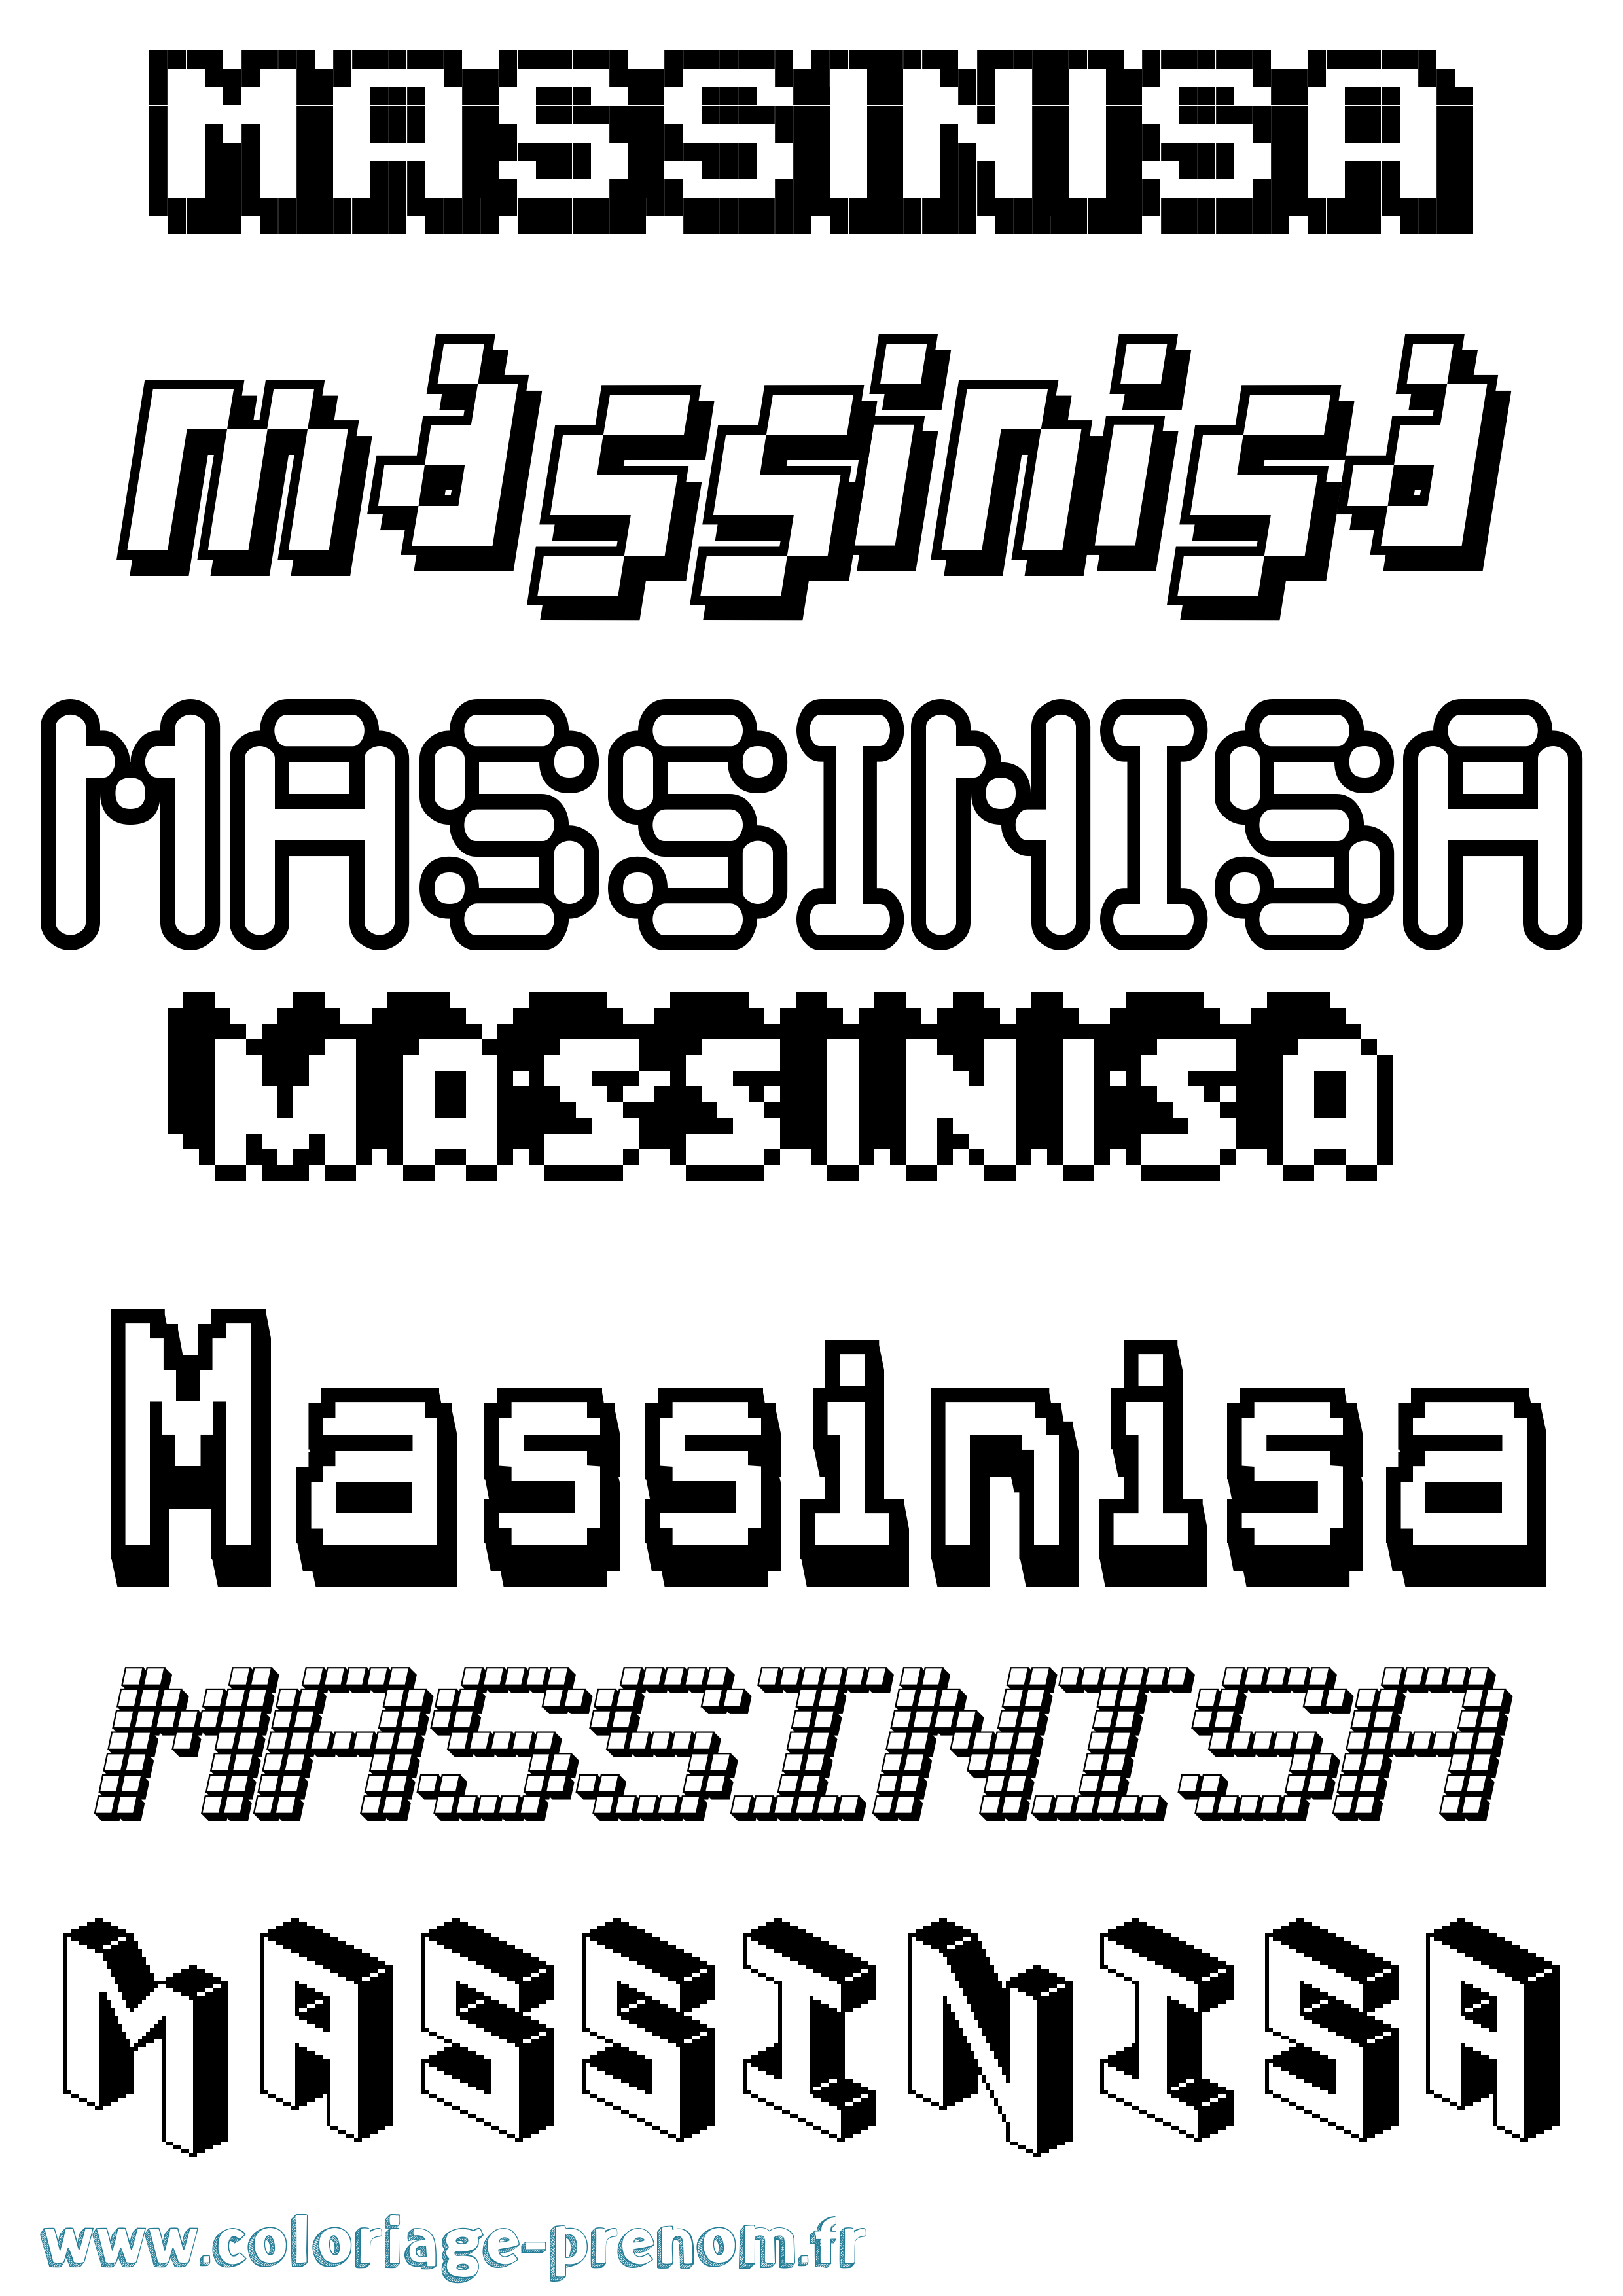 Coloriage prénom Massinisa Pixel